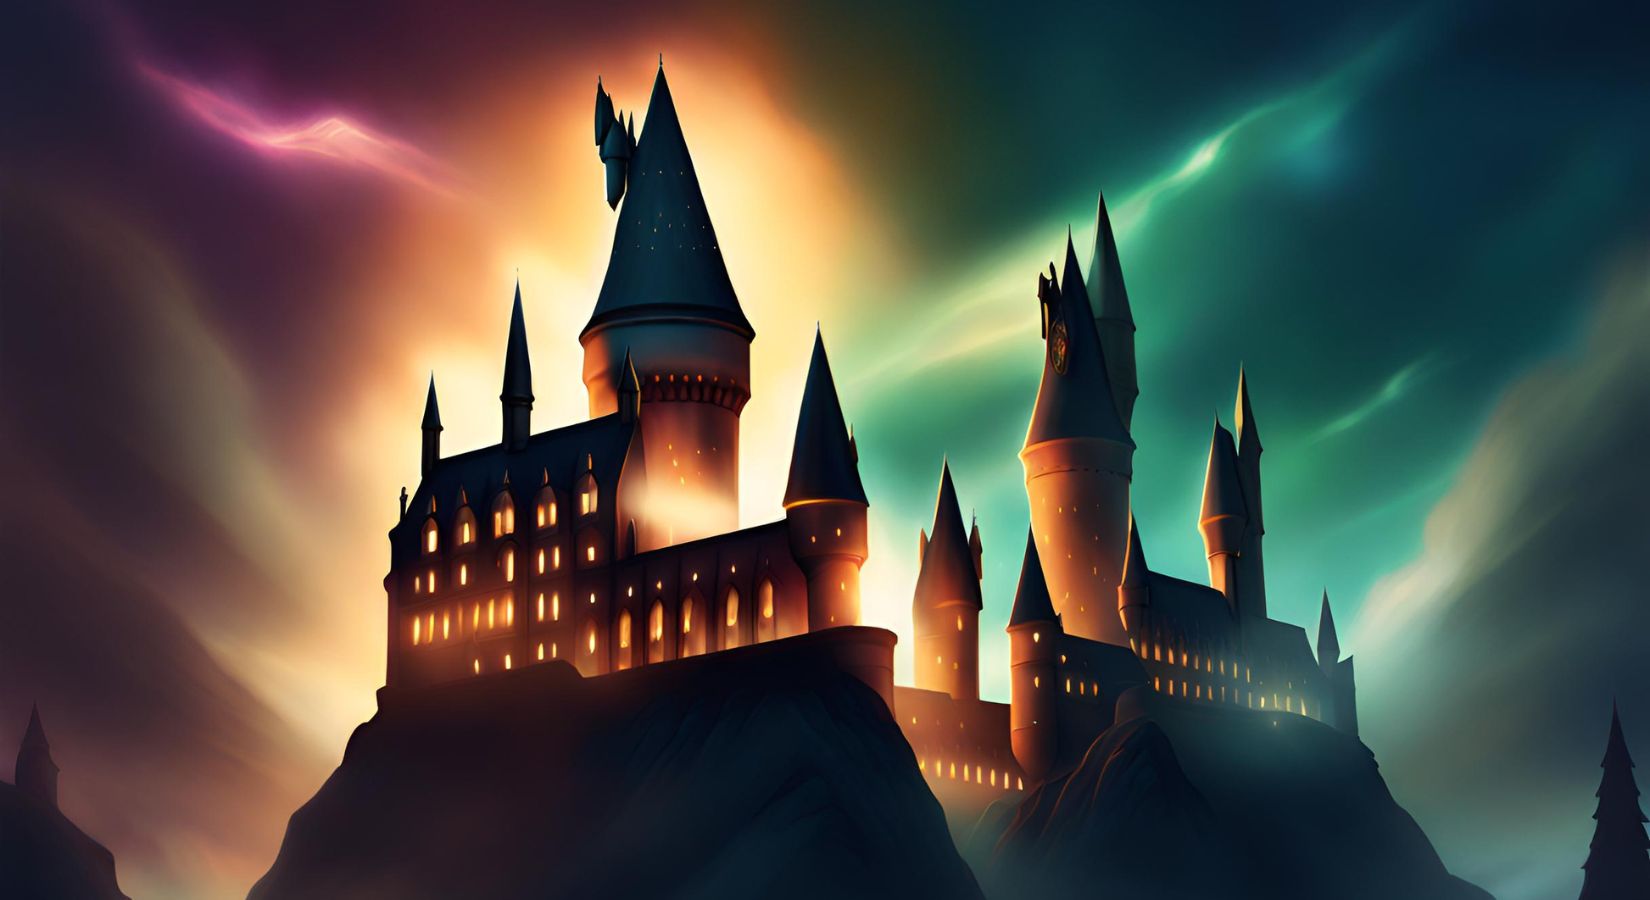 Hogwarts Legacy game banner